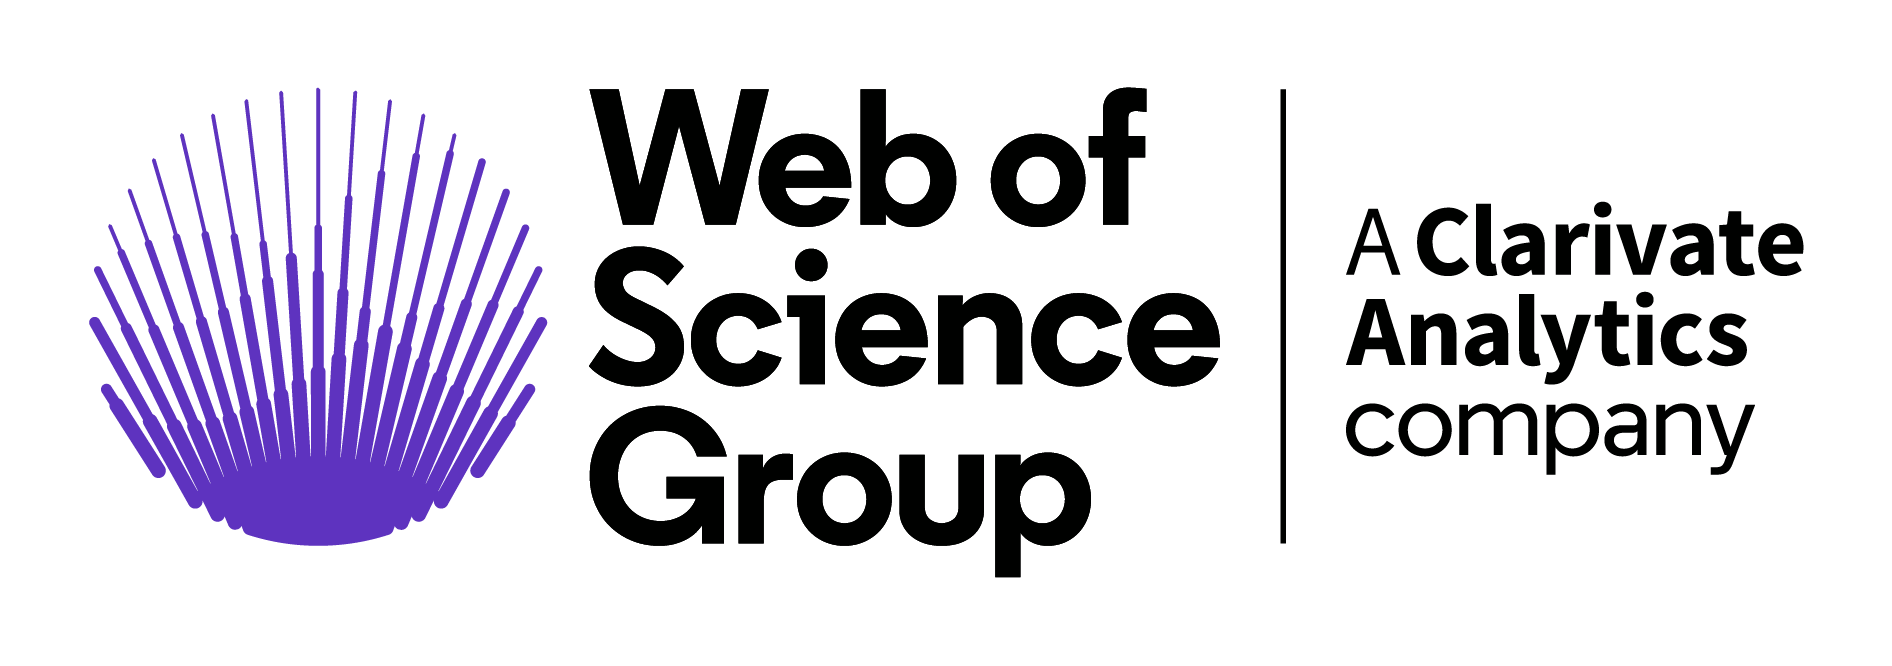 Logo Web of Science Group / A Clarivate Analytics company